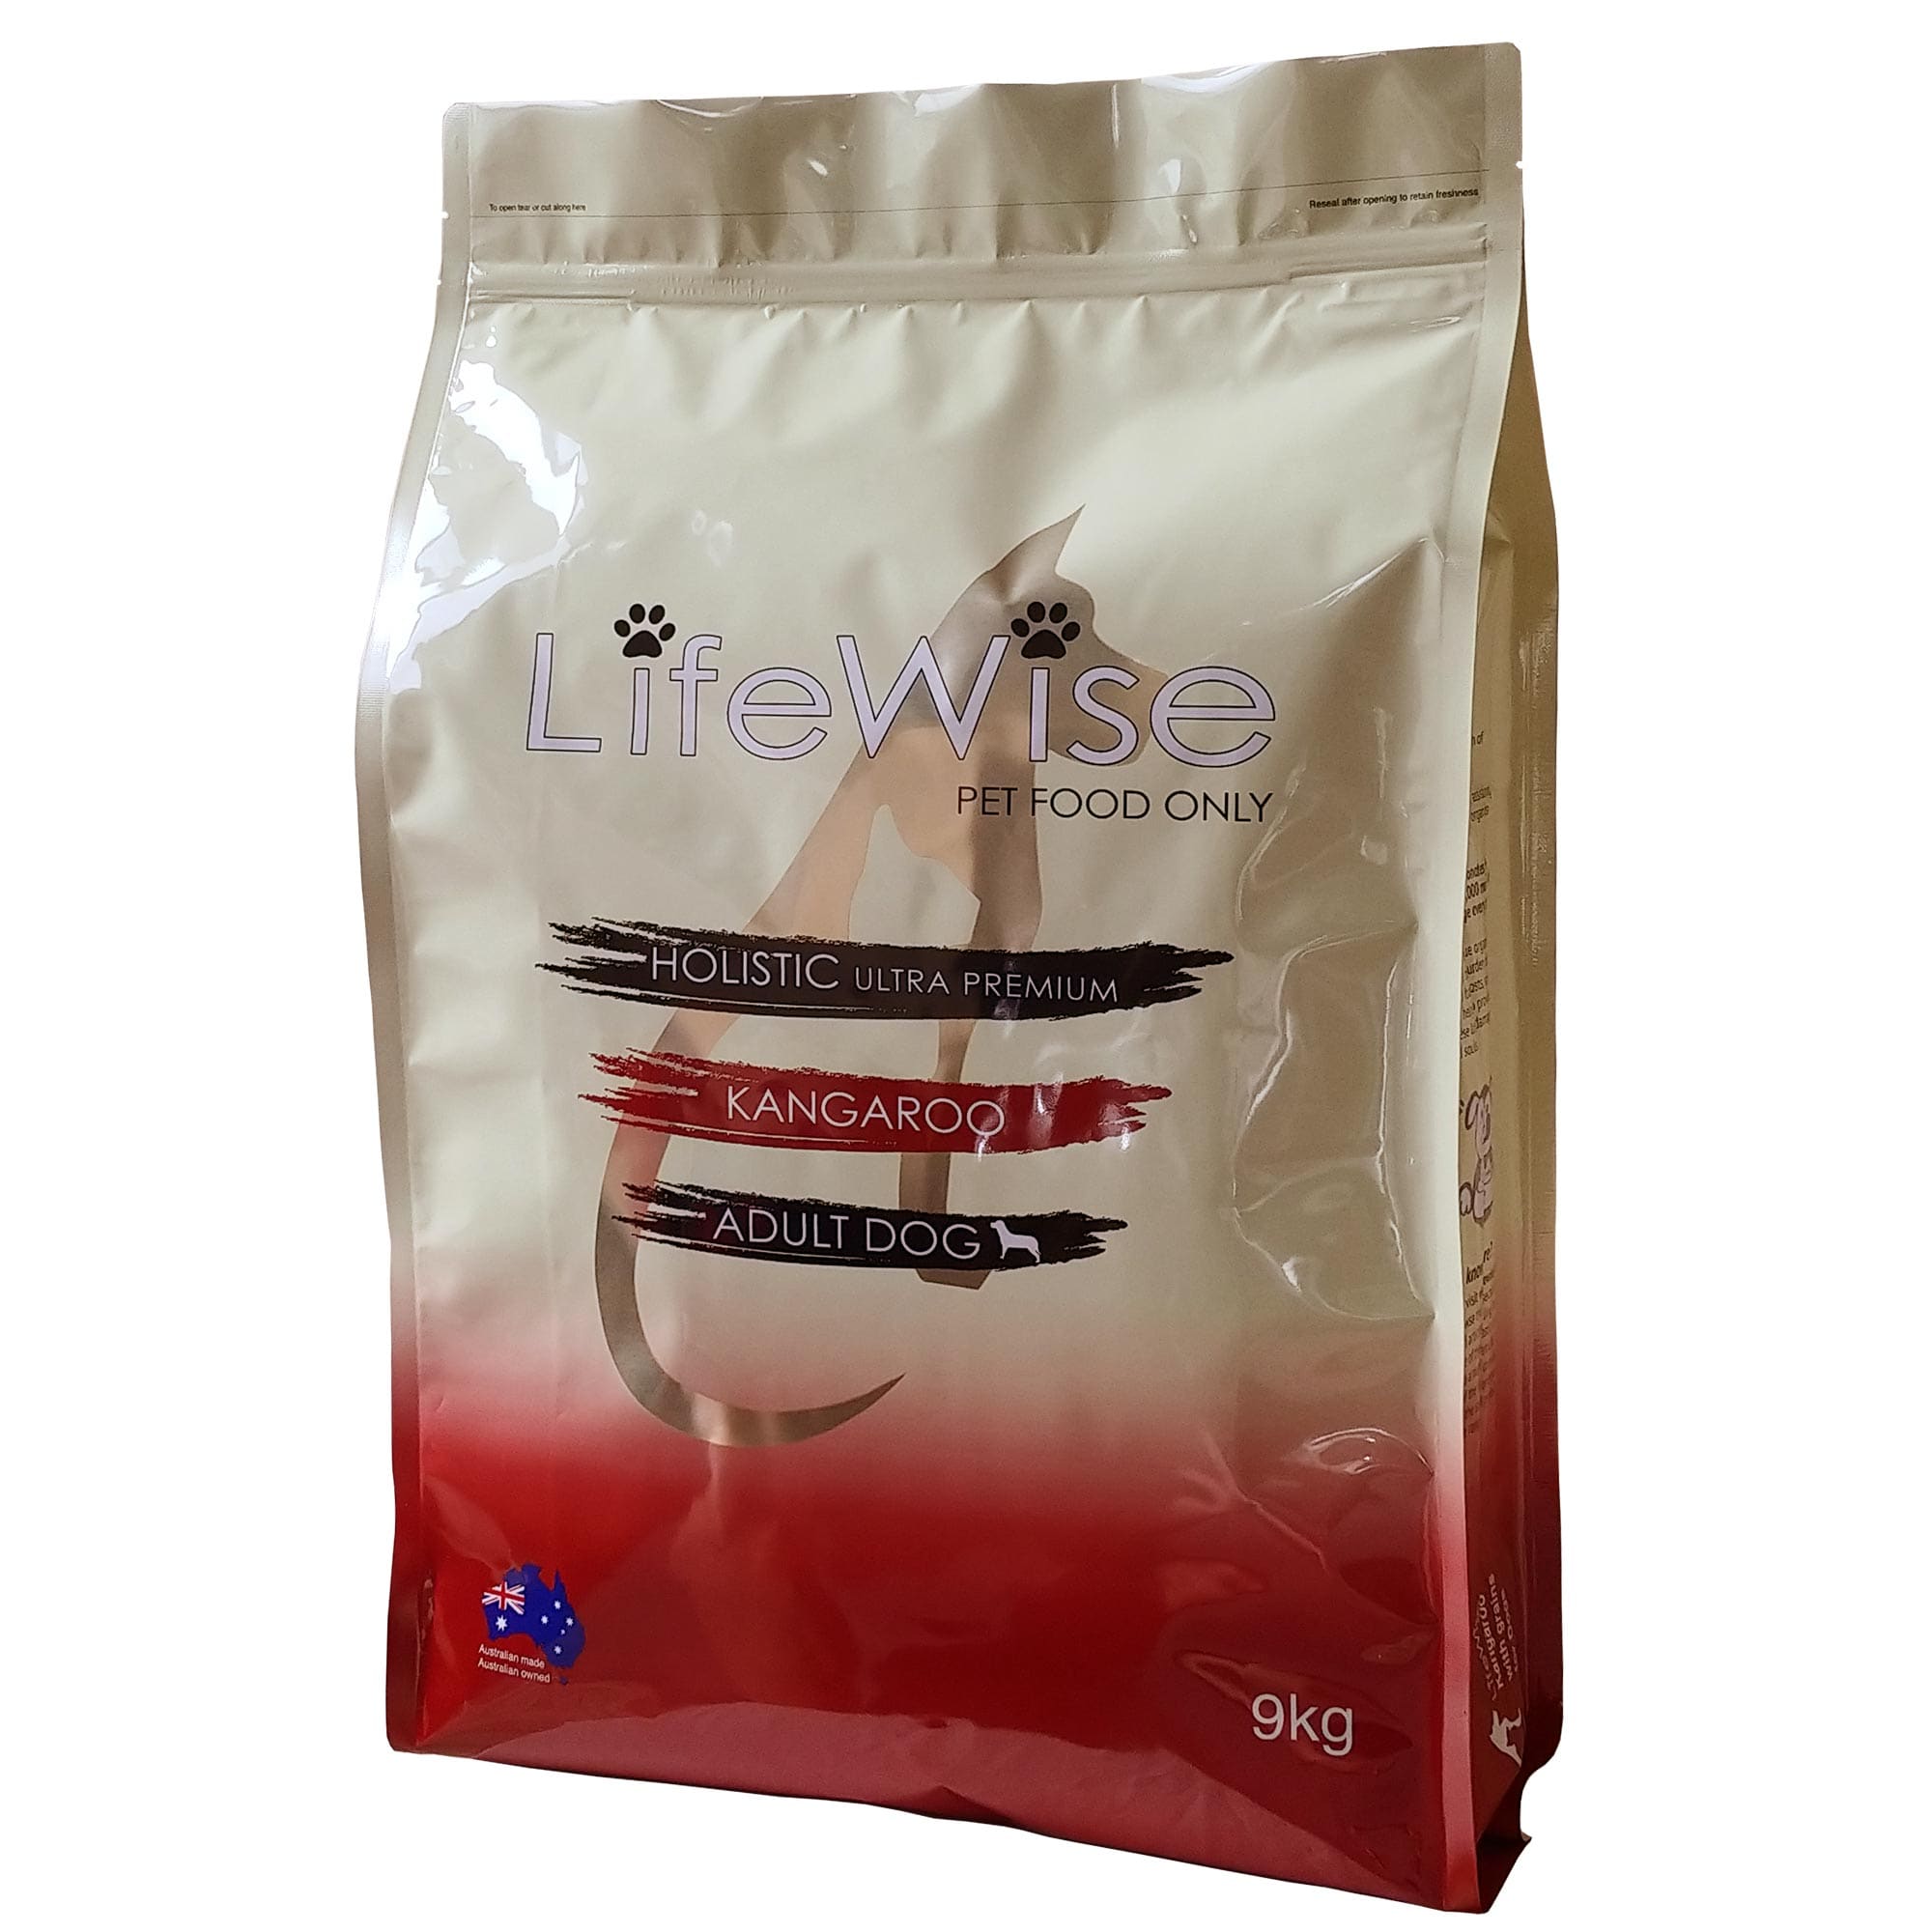 LifeWise Dog Dry Food Lifewise Kangaroo and Lamb 9kg